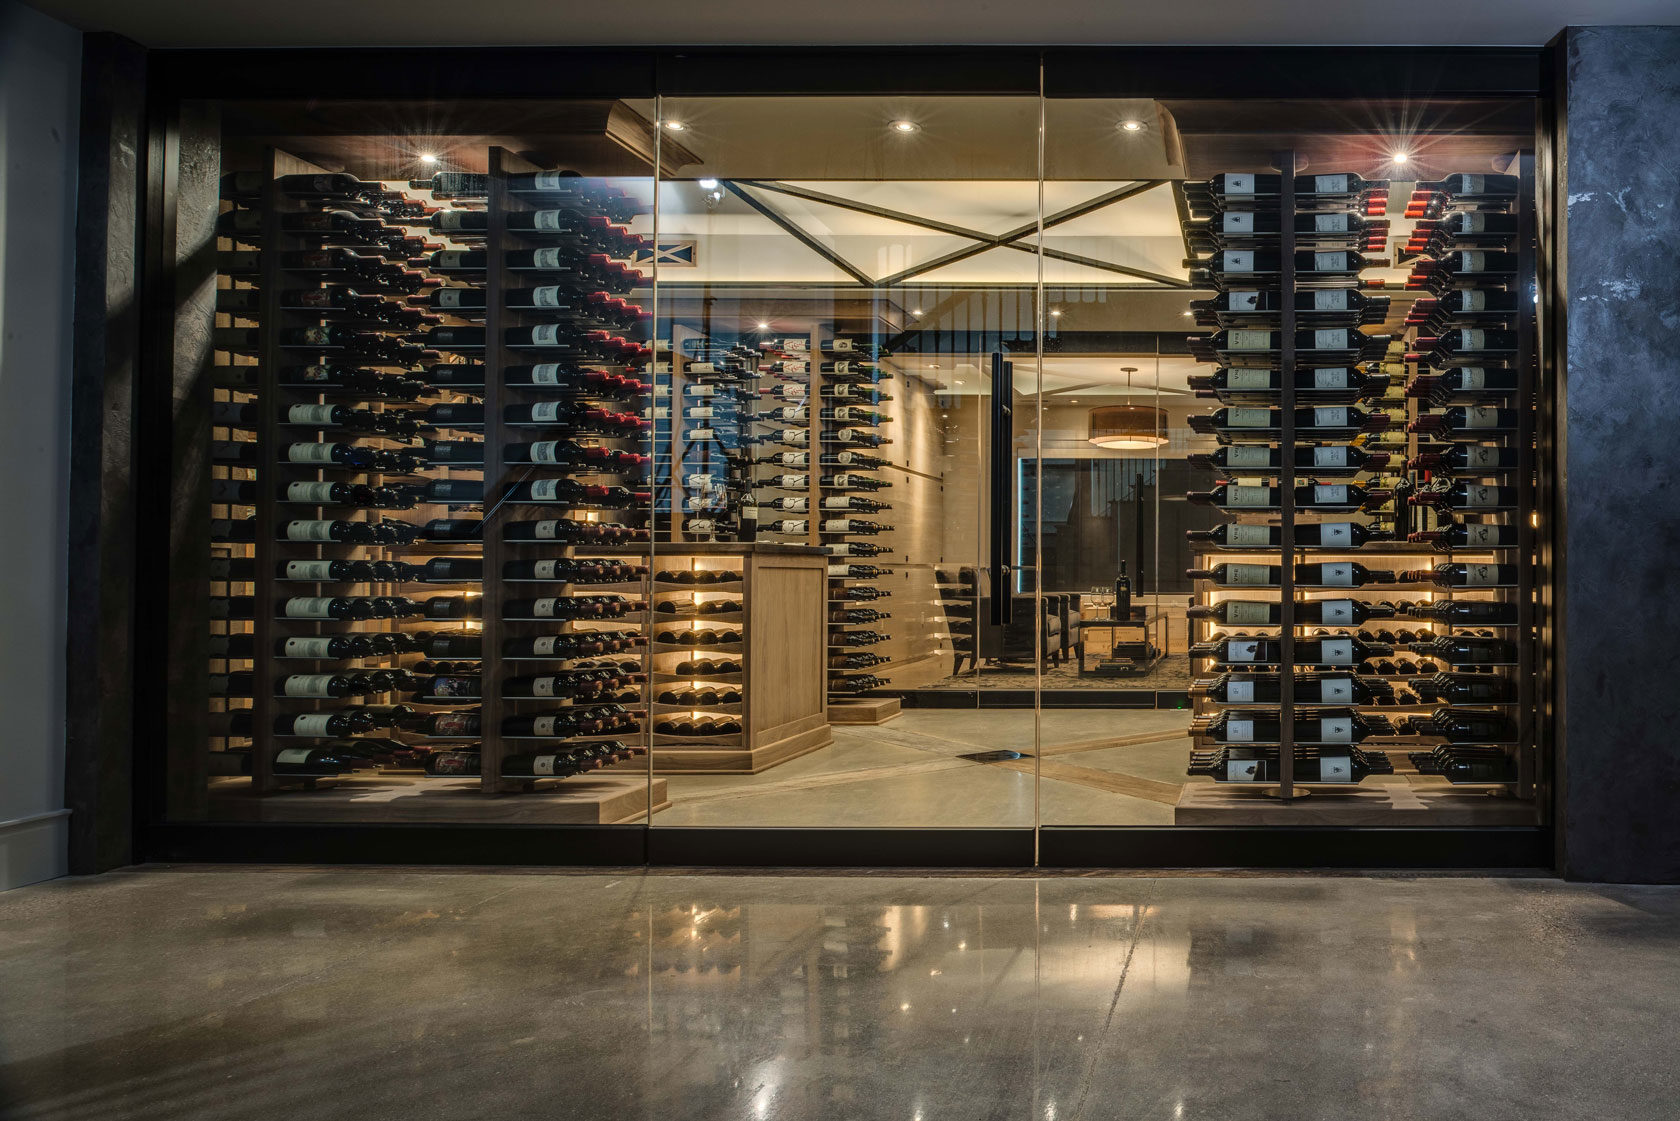 Glass Enclosed Wine Cellar